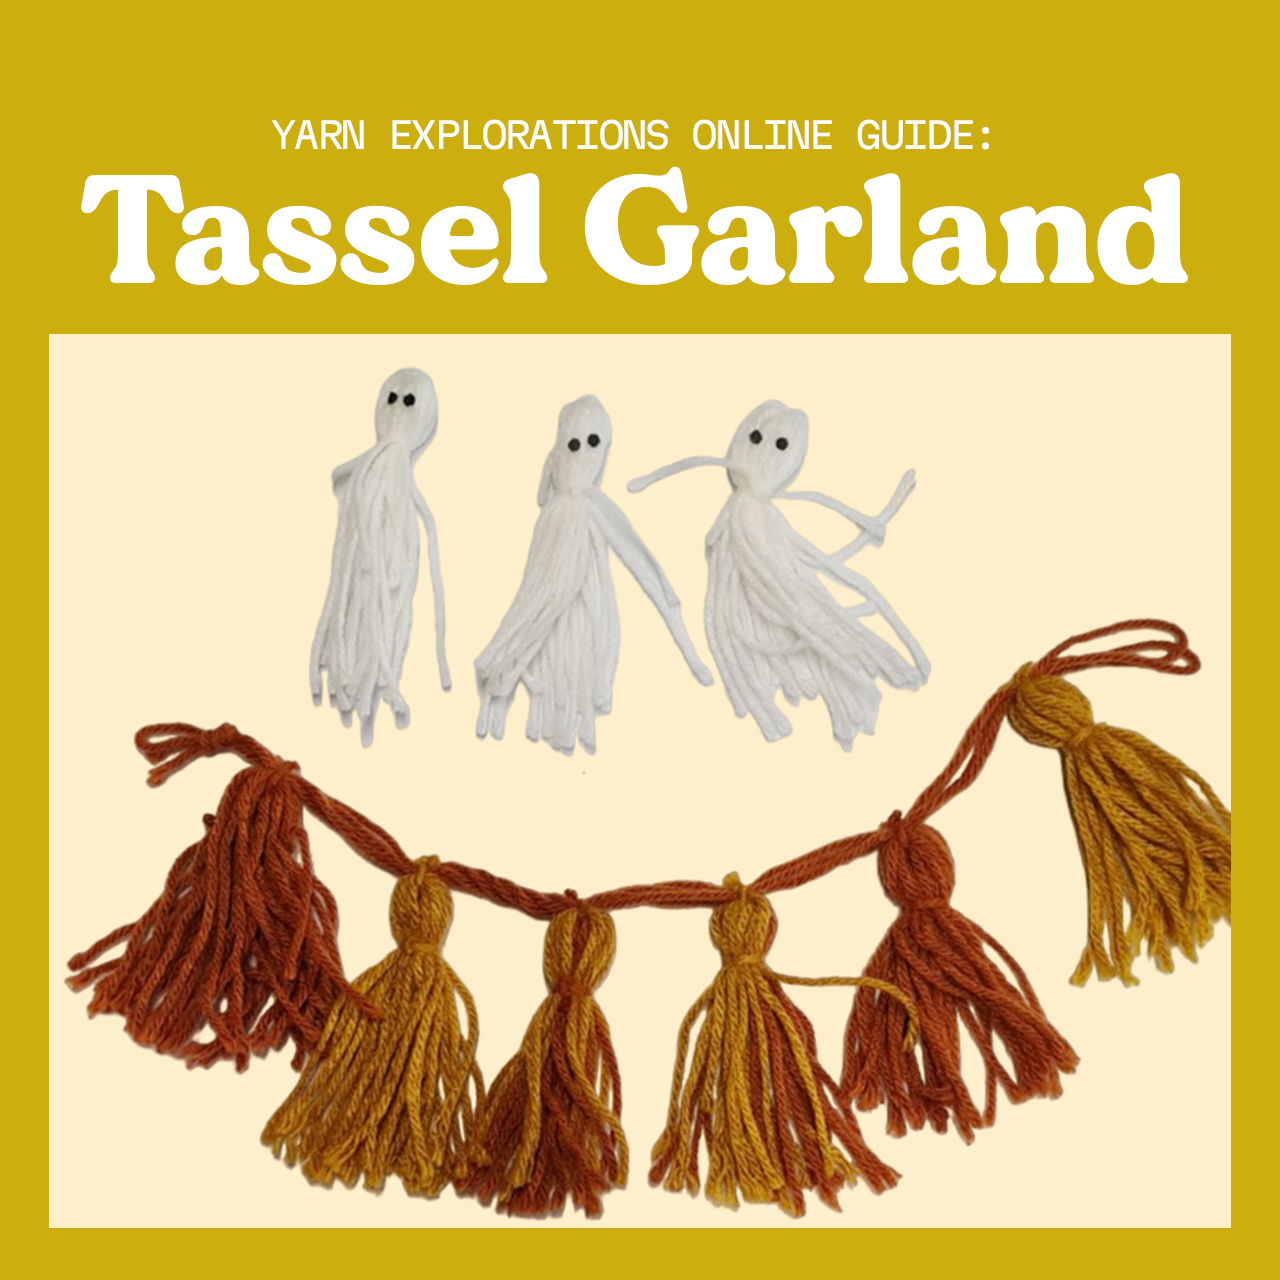 Yarn Explorations: Tassel Garland